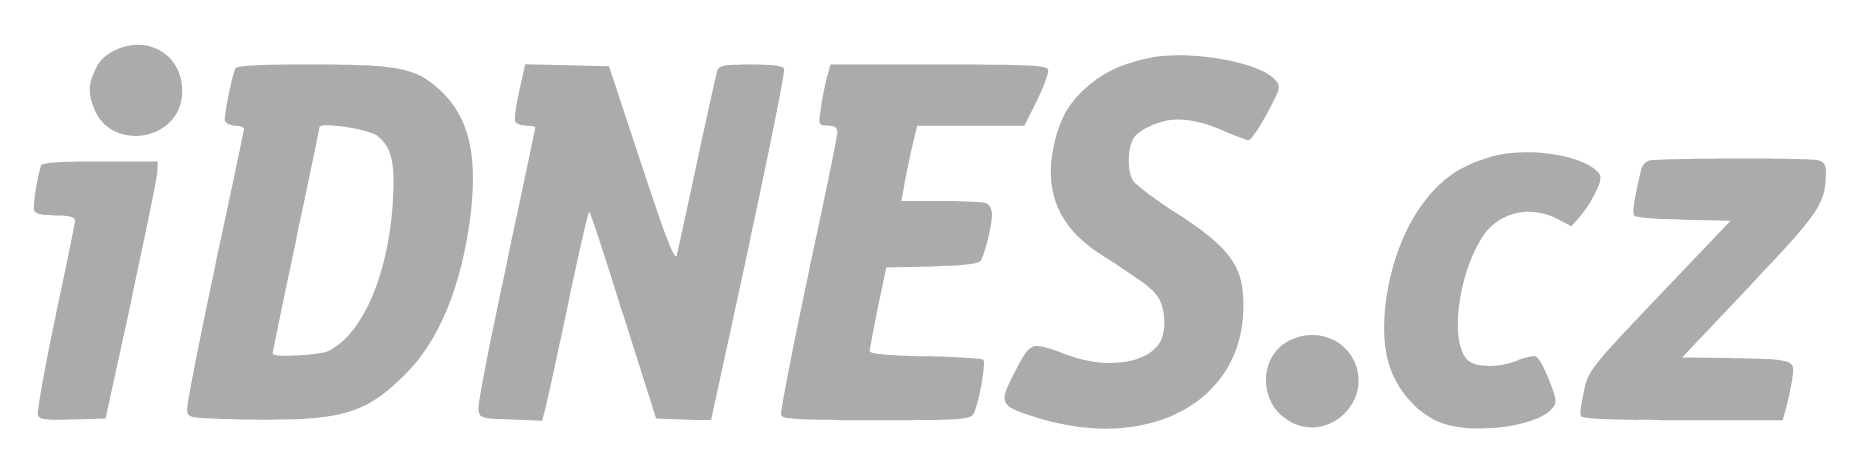 iDnes logo